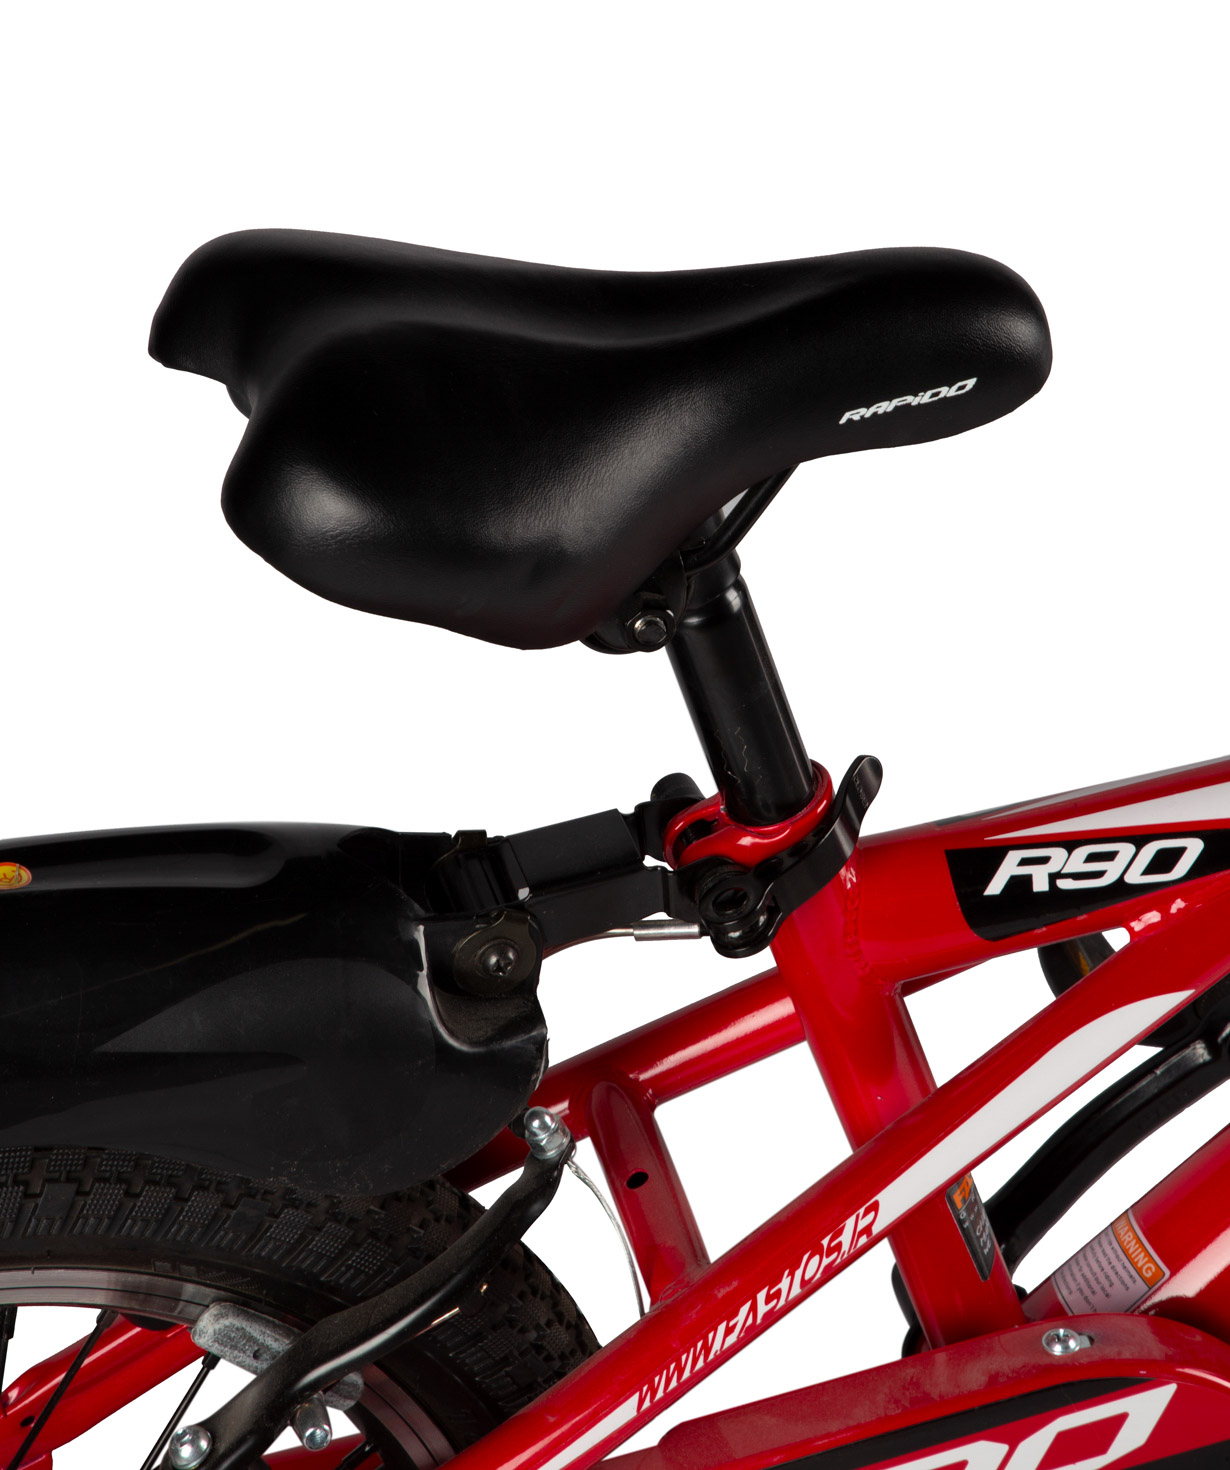 Bicycle `Rapido` 16-5R90